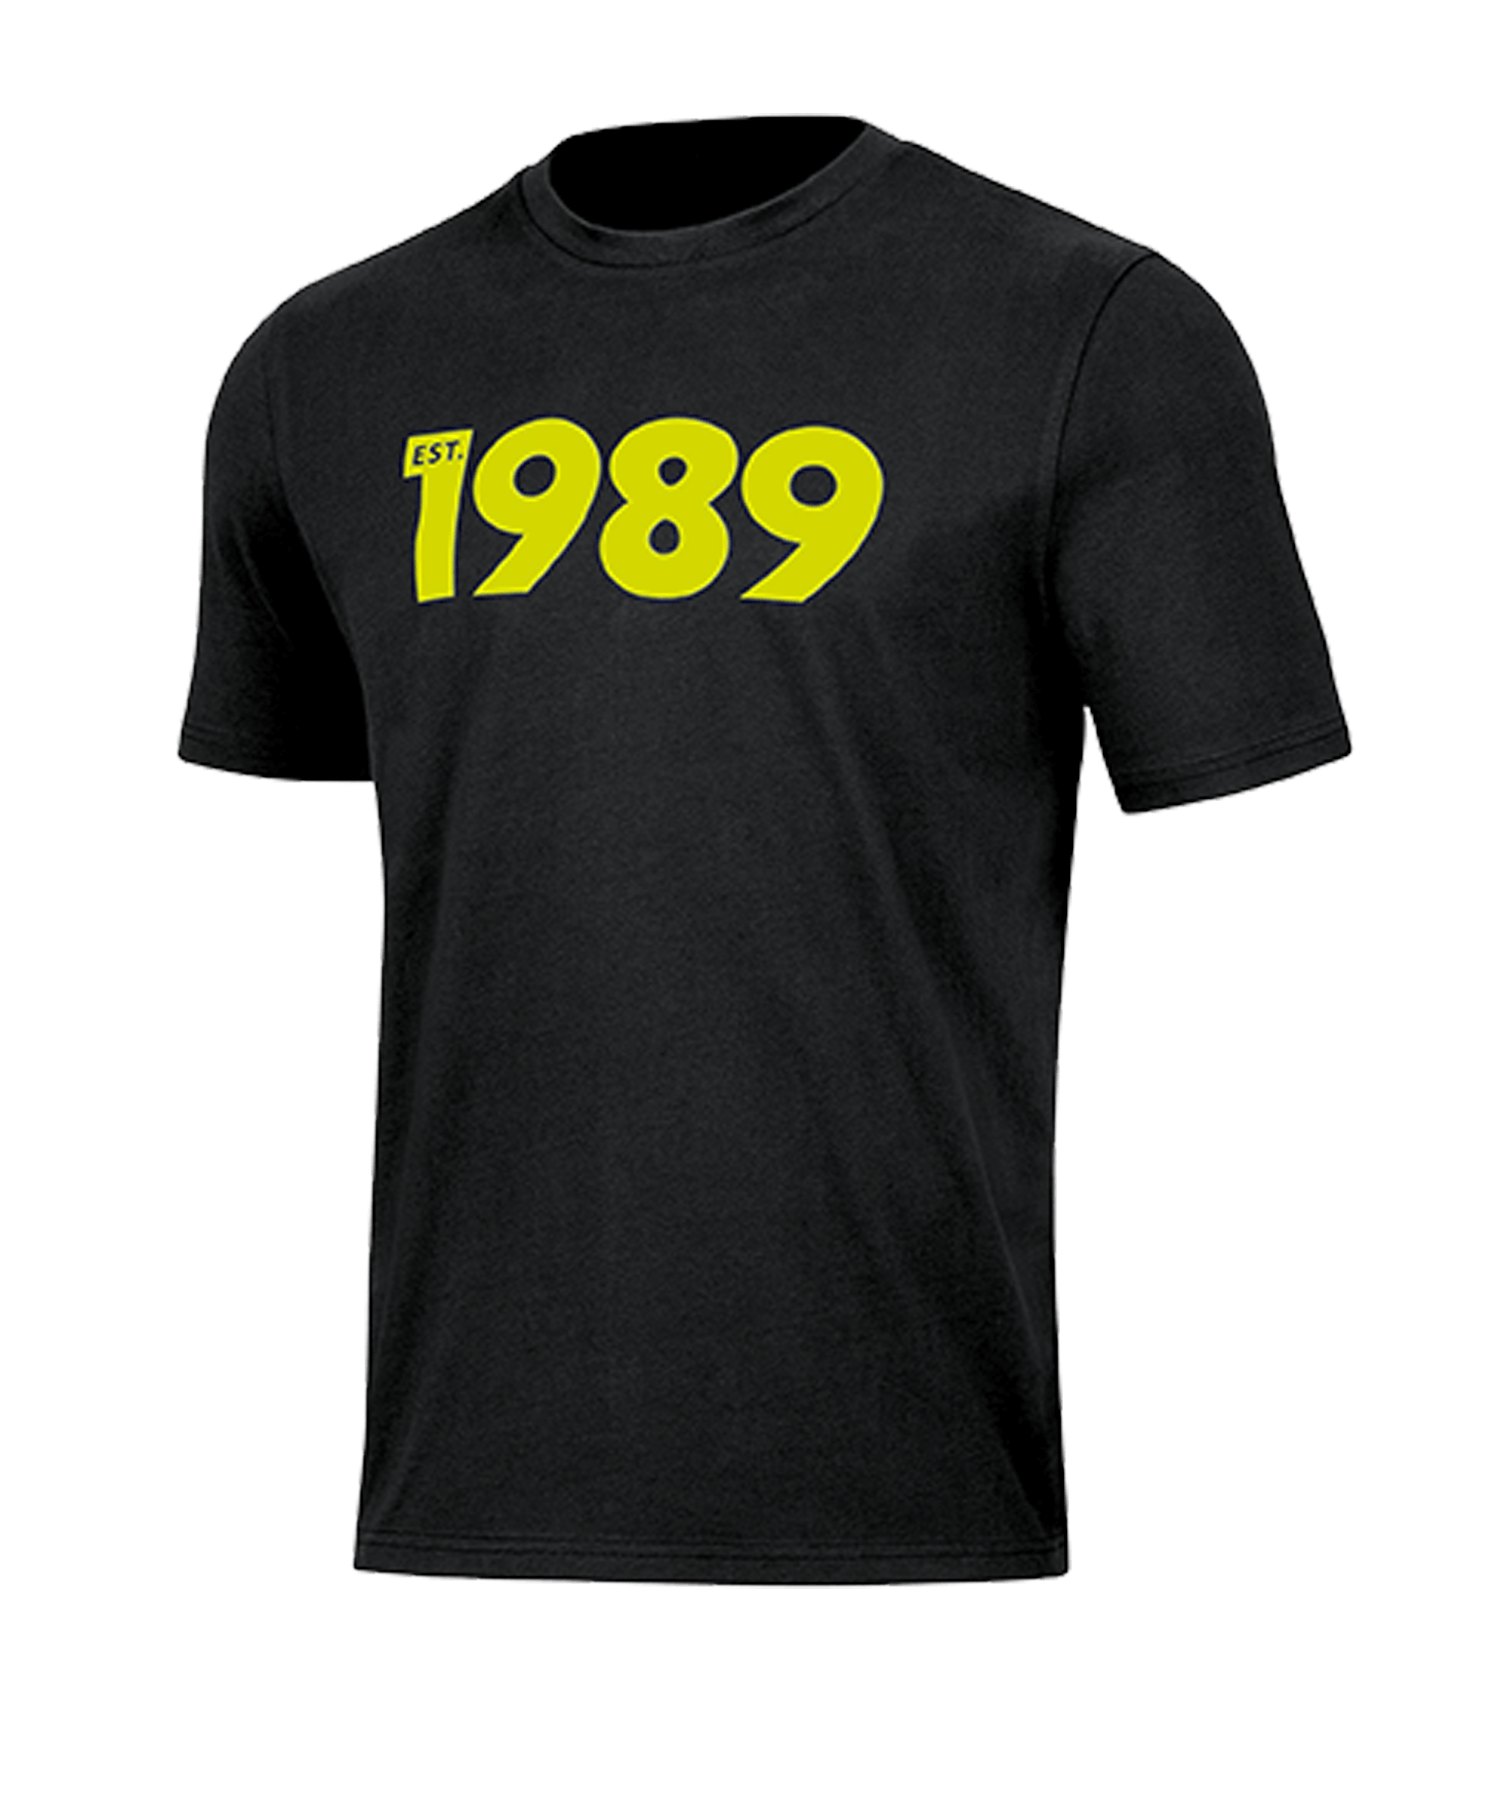 Jako Base 1989 T-Shirt Schwarz F08 - schwarz